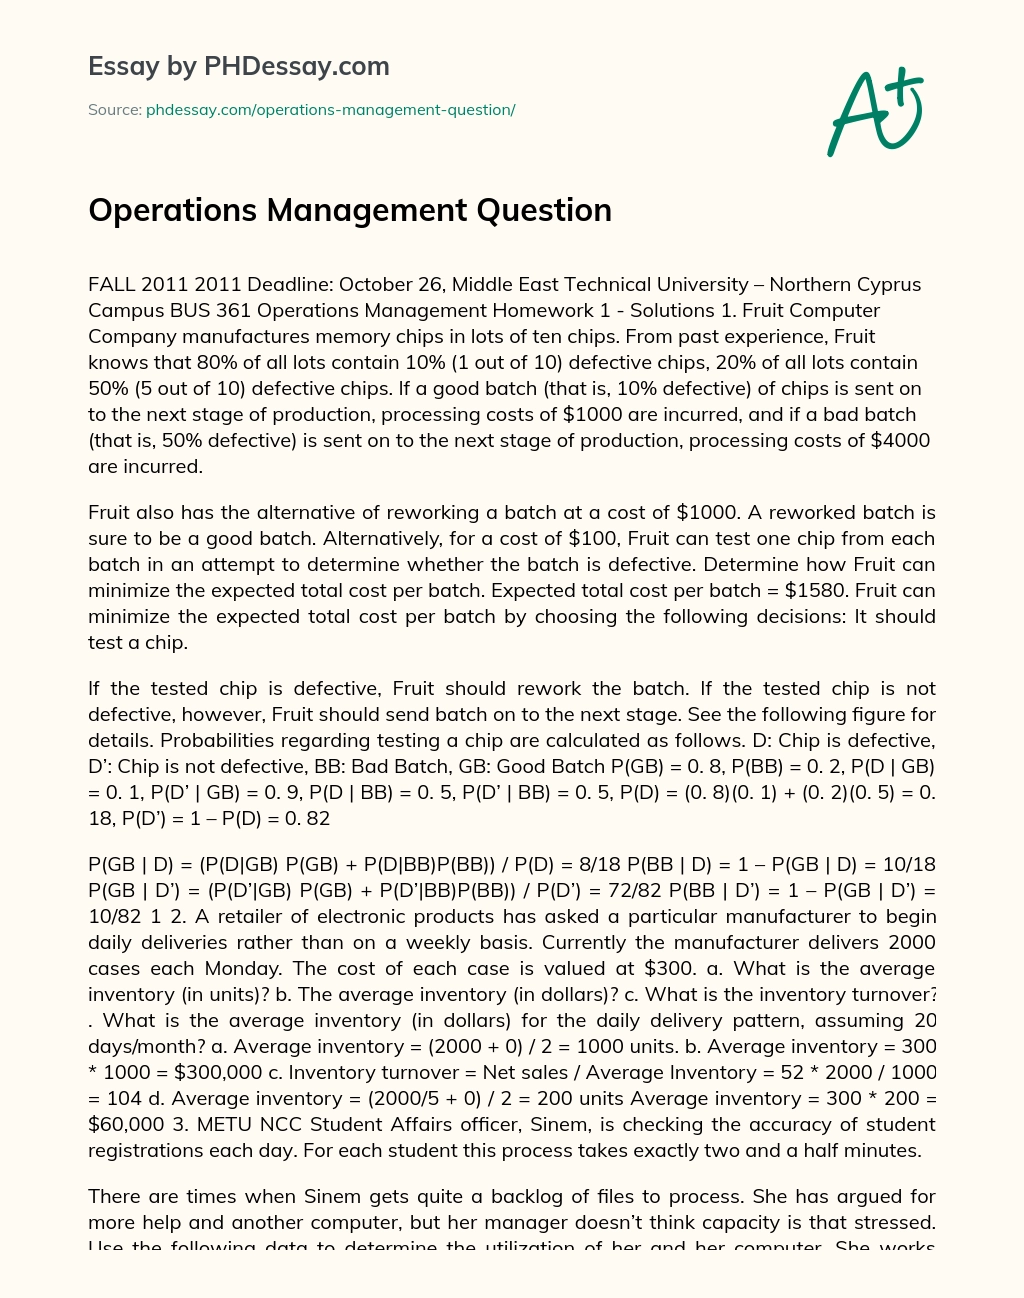 Operations Management Question essay